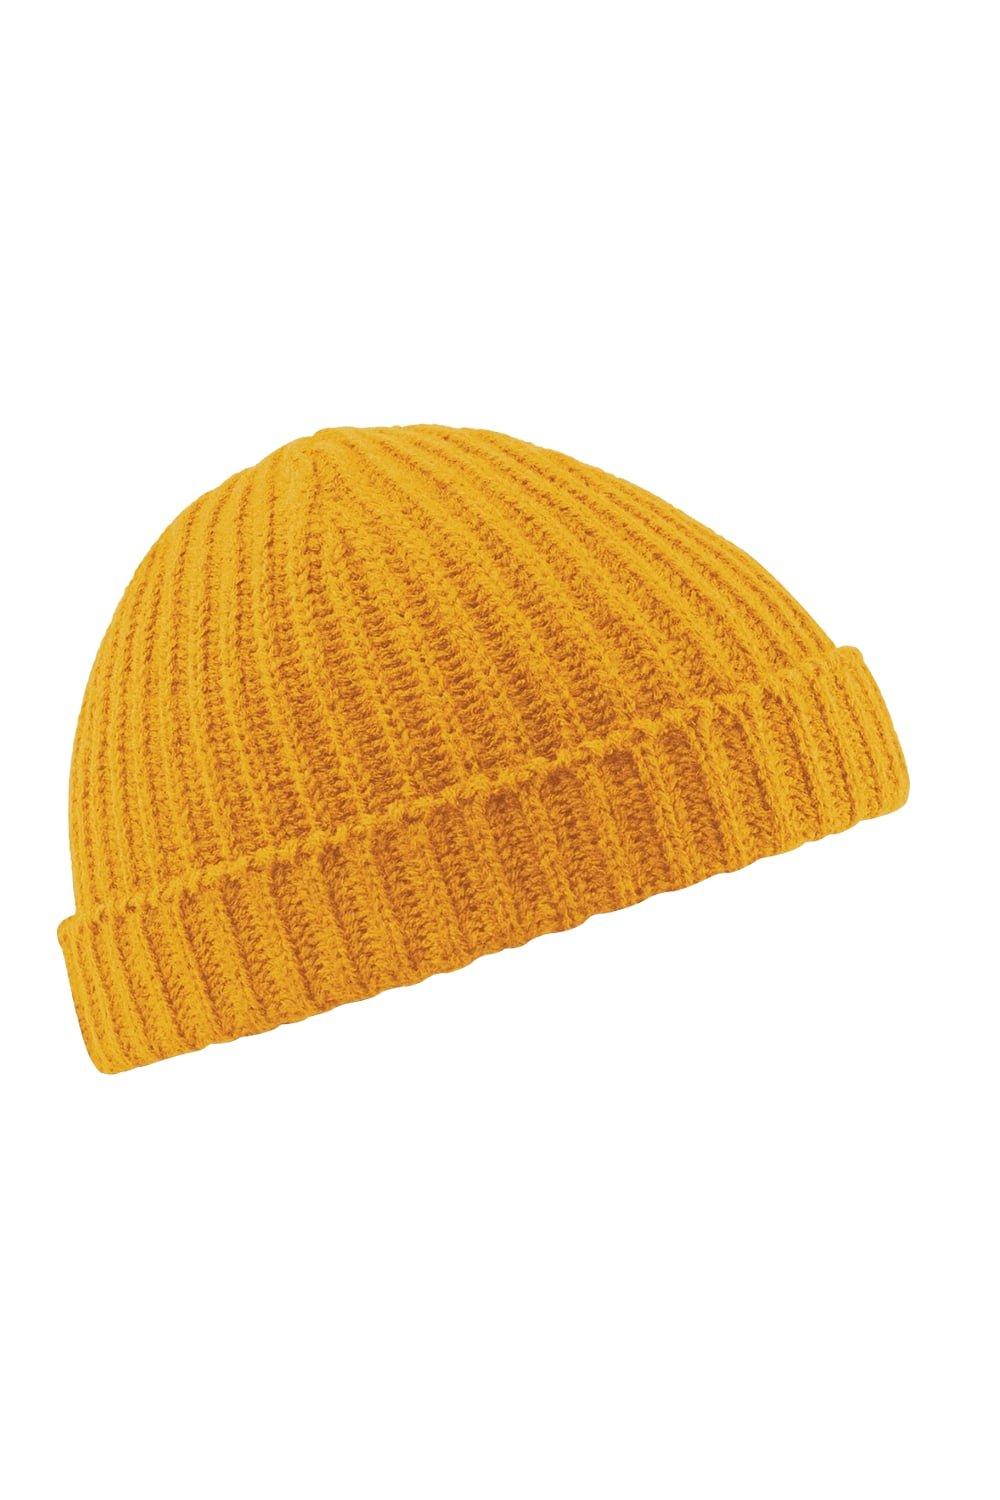 Траулерная шапка Beechfield, желтый